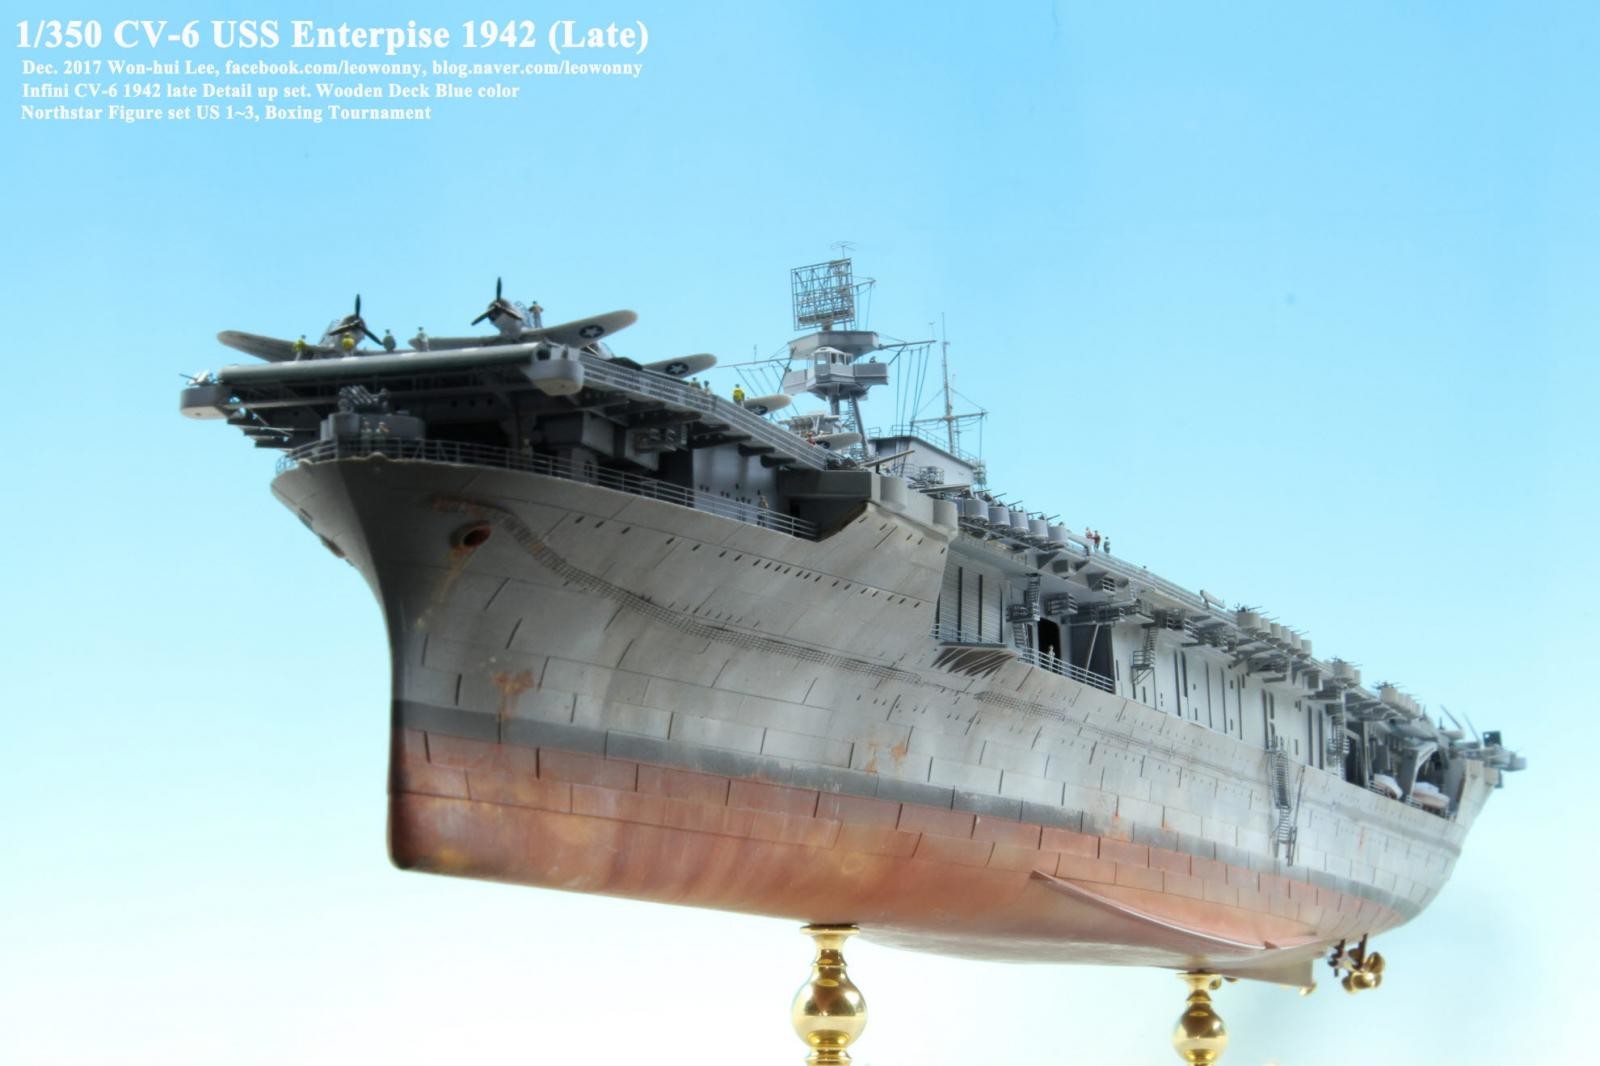 The build log: USS Enterprise 1942, by Can Woraprat Saelo